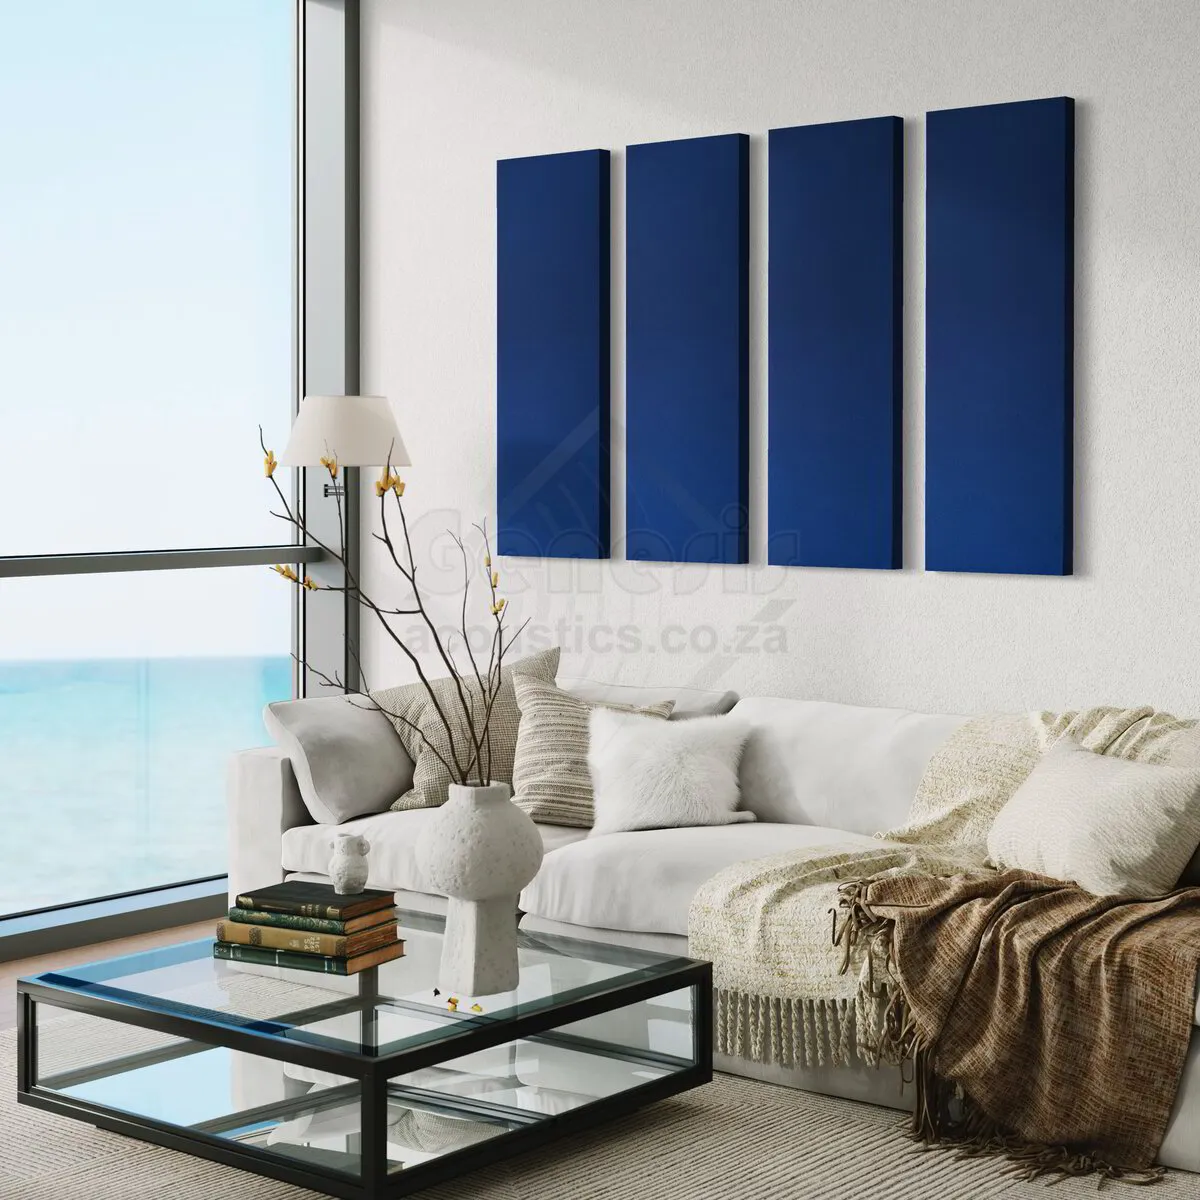 S5 Pro Acoustic Wall Panels - 120cm x 40cm Set of 4 - Bahama